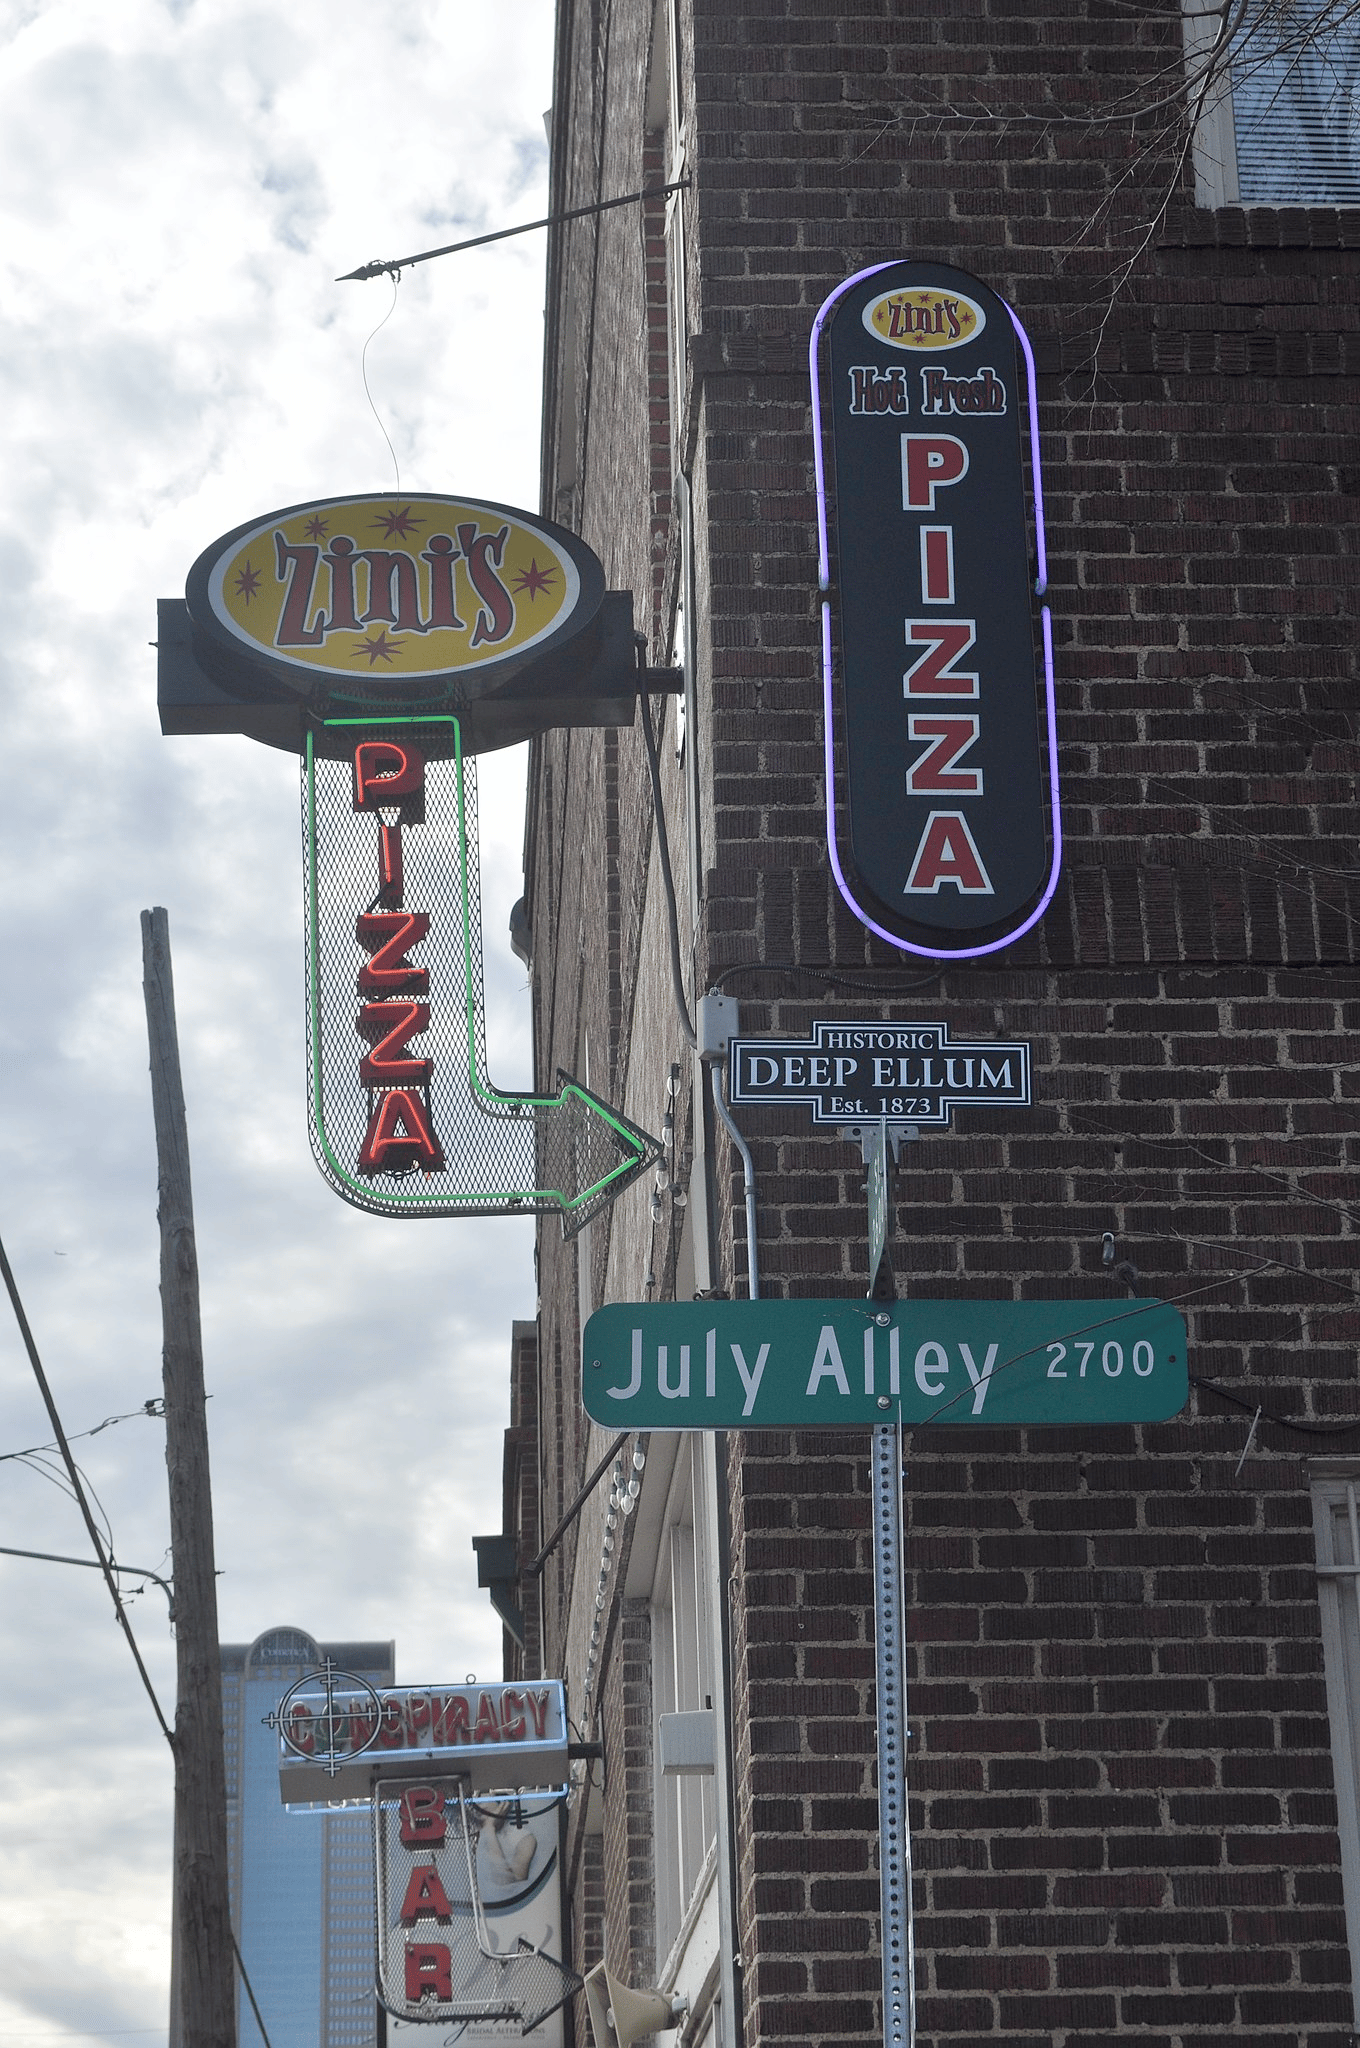 Zini's Pizza sign and July Alley, 2639 Elm Street, Deep Ellum, Dallas, Texas | Dallas Landmarks